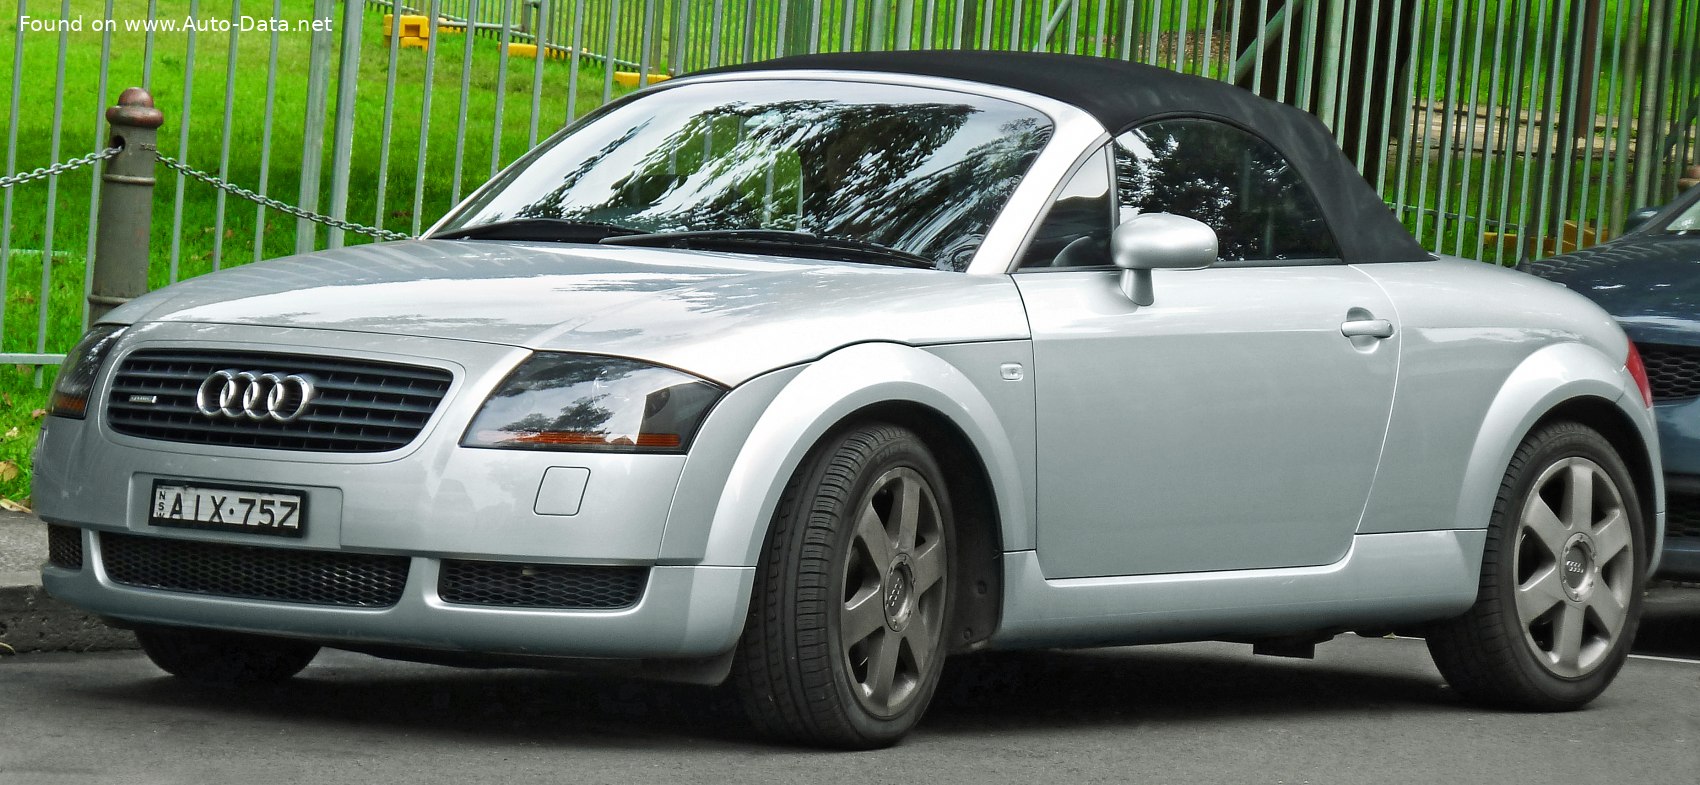 1998 Audi TT Roadster (8N) 1.8 T (180 PS)  Technische Daten, Verbrauch,  Spezifikationen, Maße